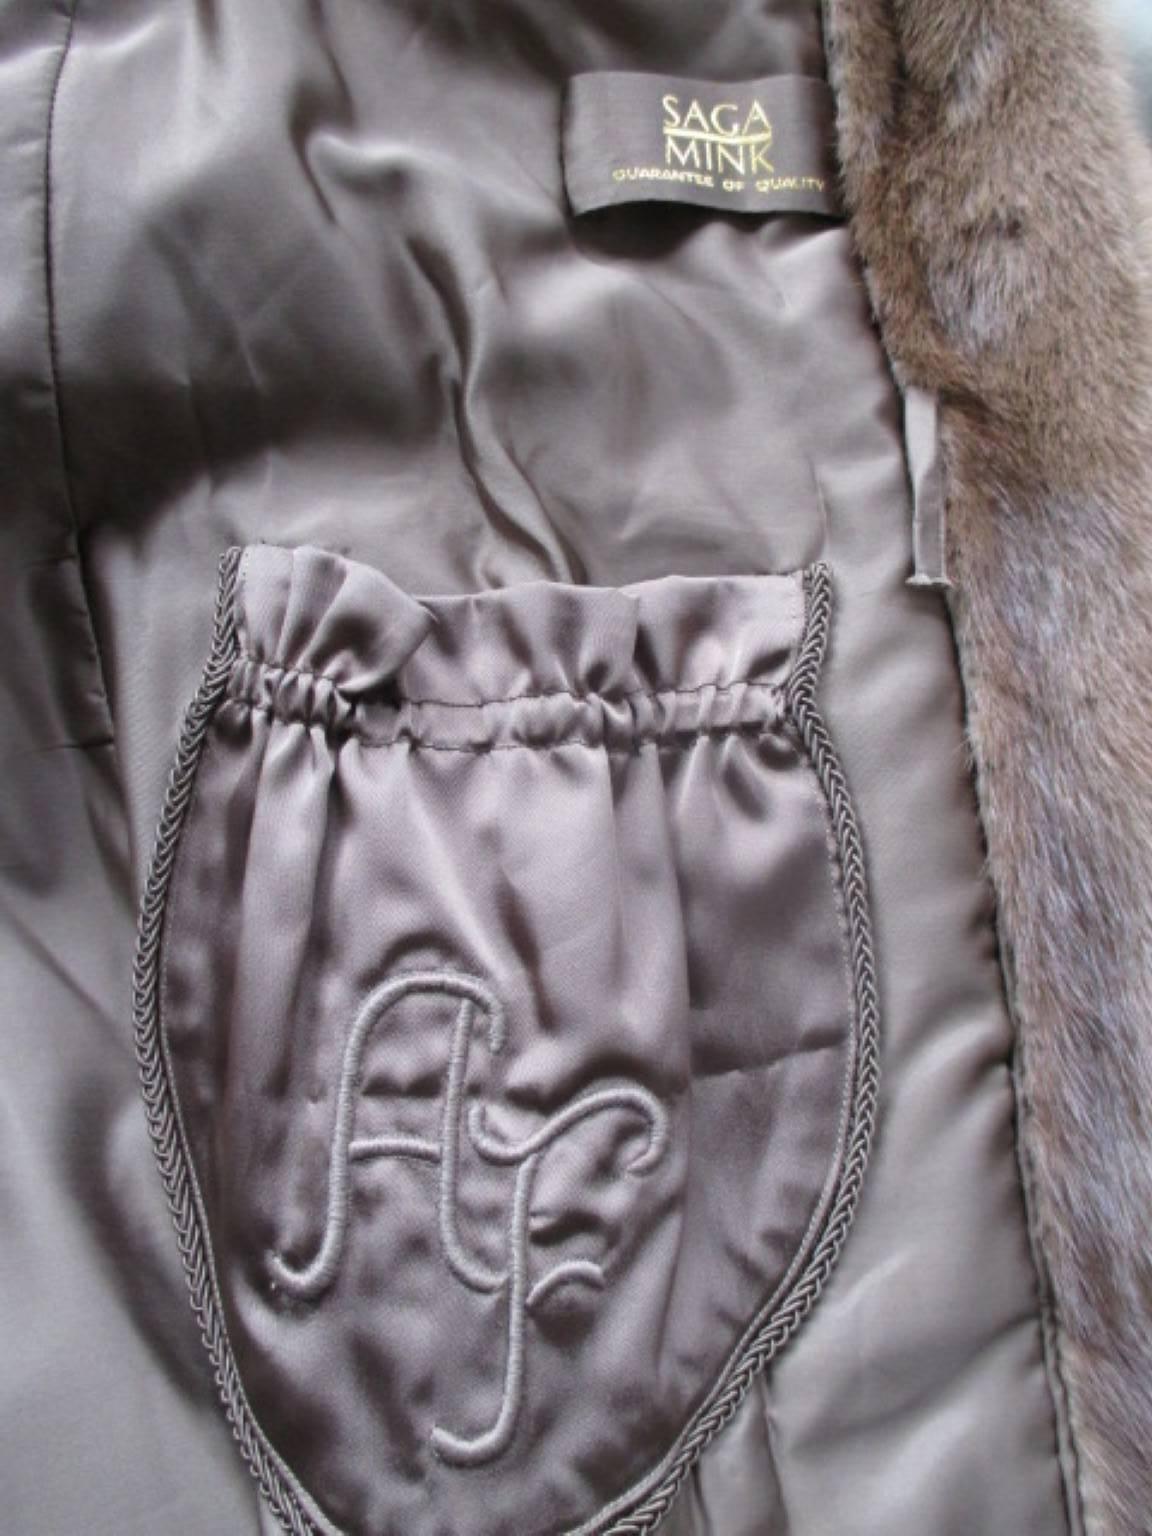 fur coat lining